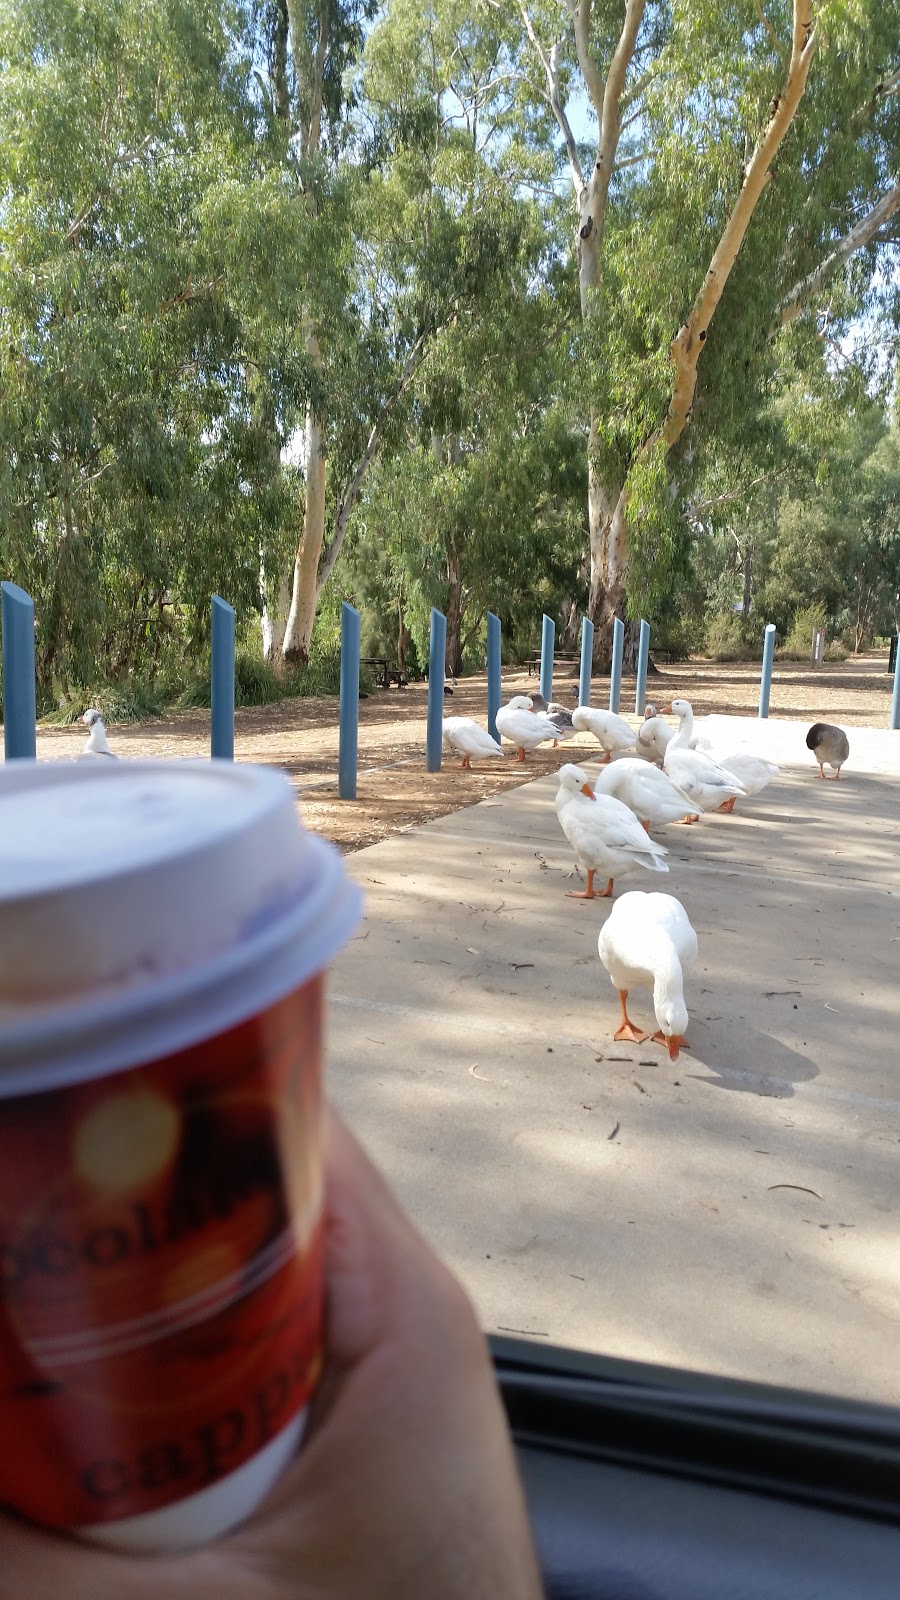 Sams Ducks car park | parking | 86 The Esplanade, Wagga Wagga NSW 2650, Australia